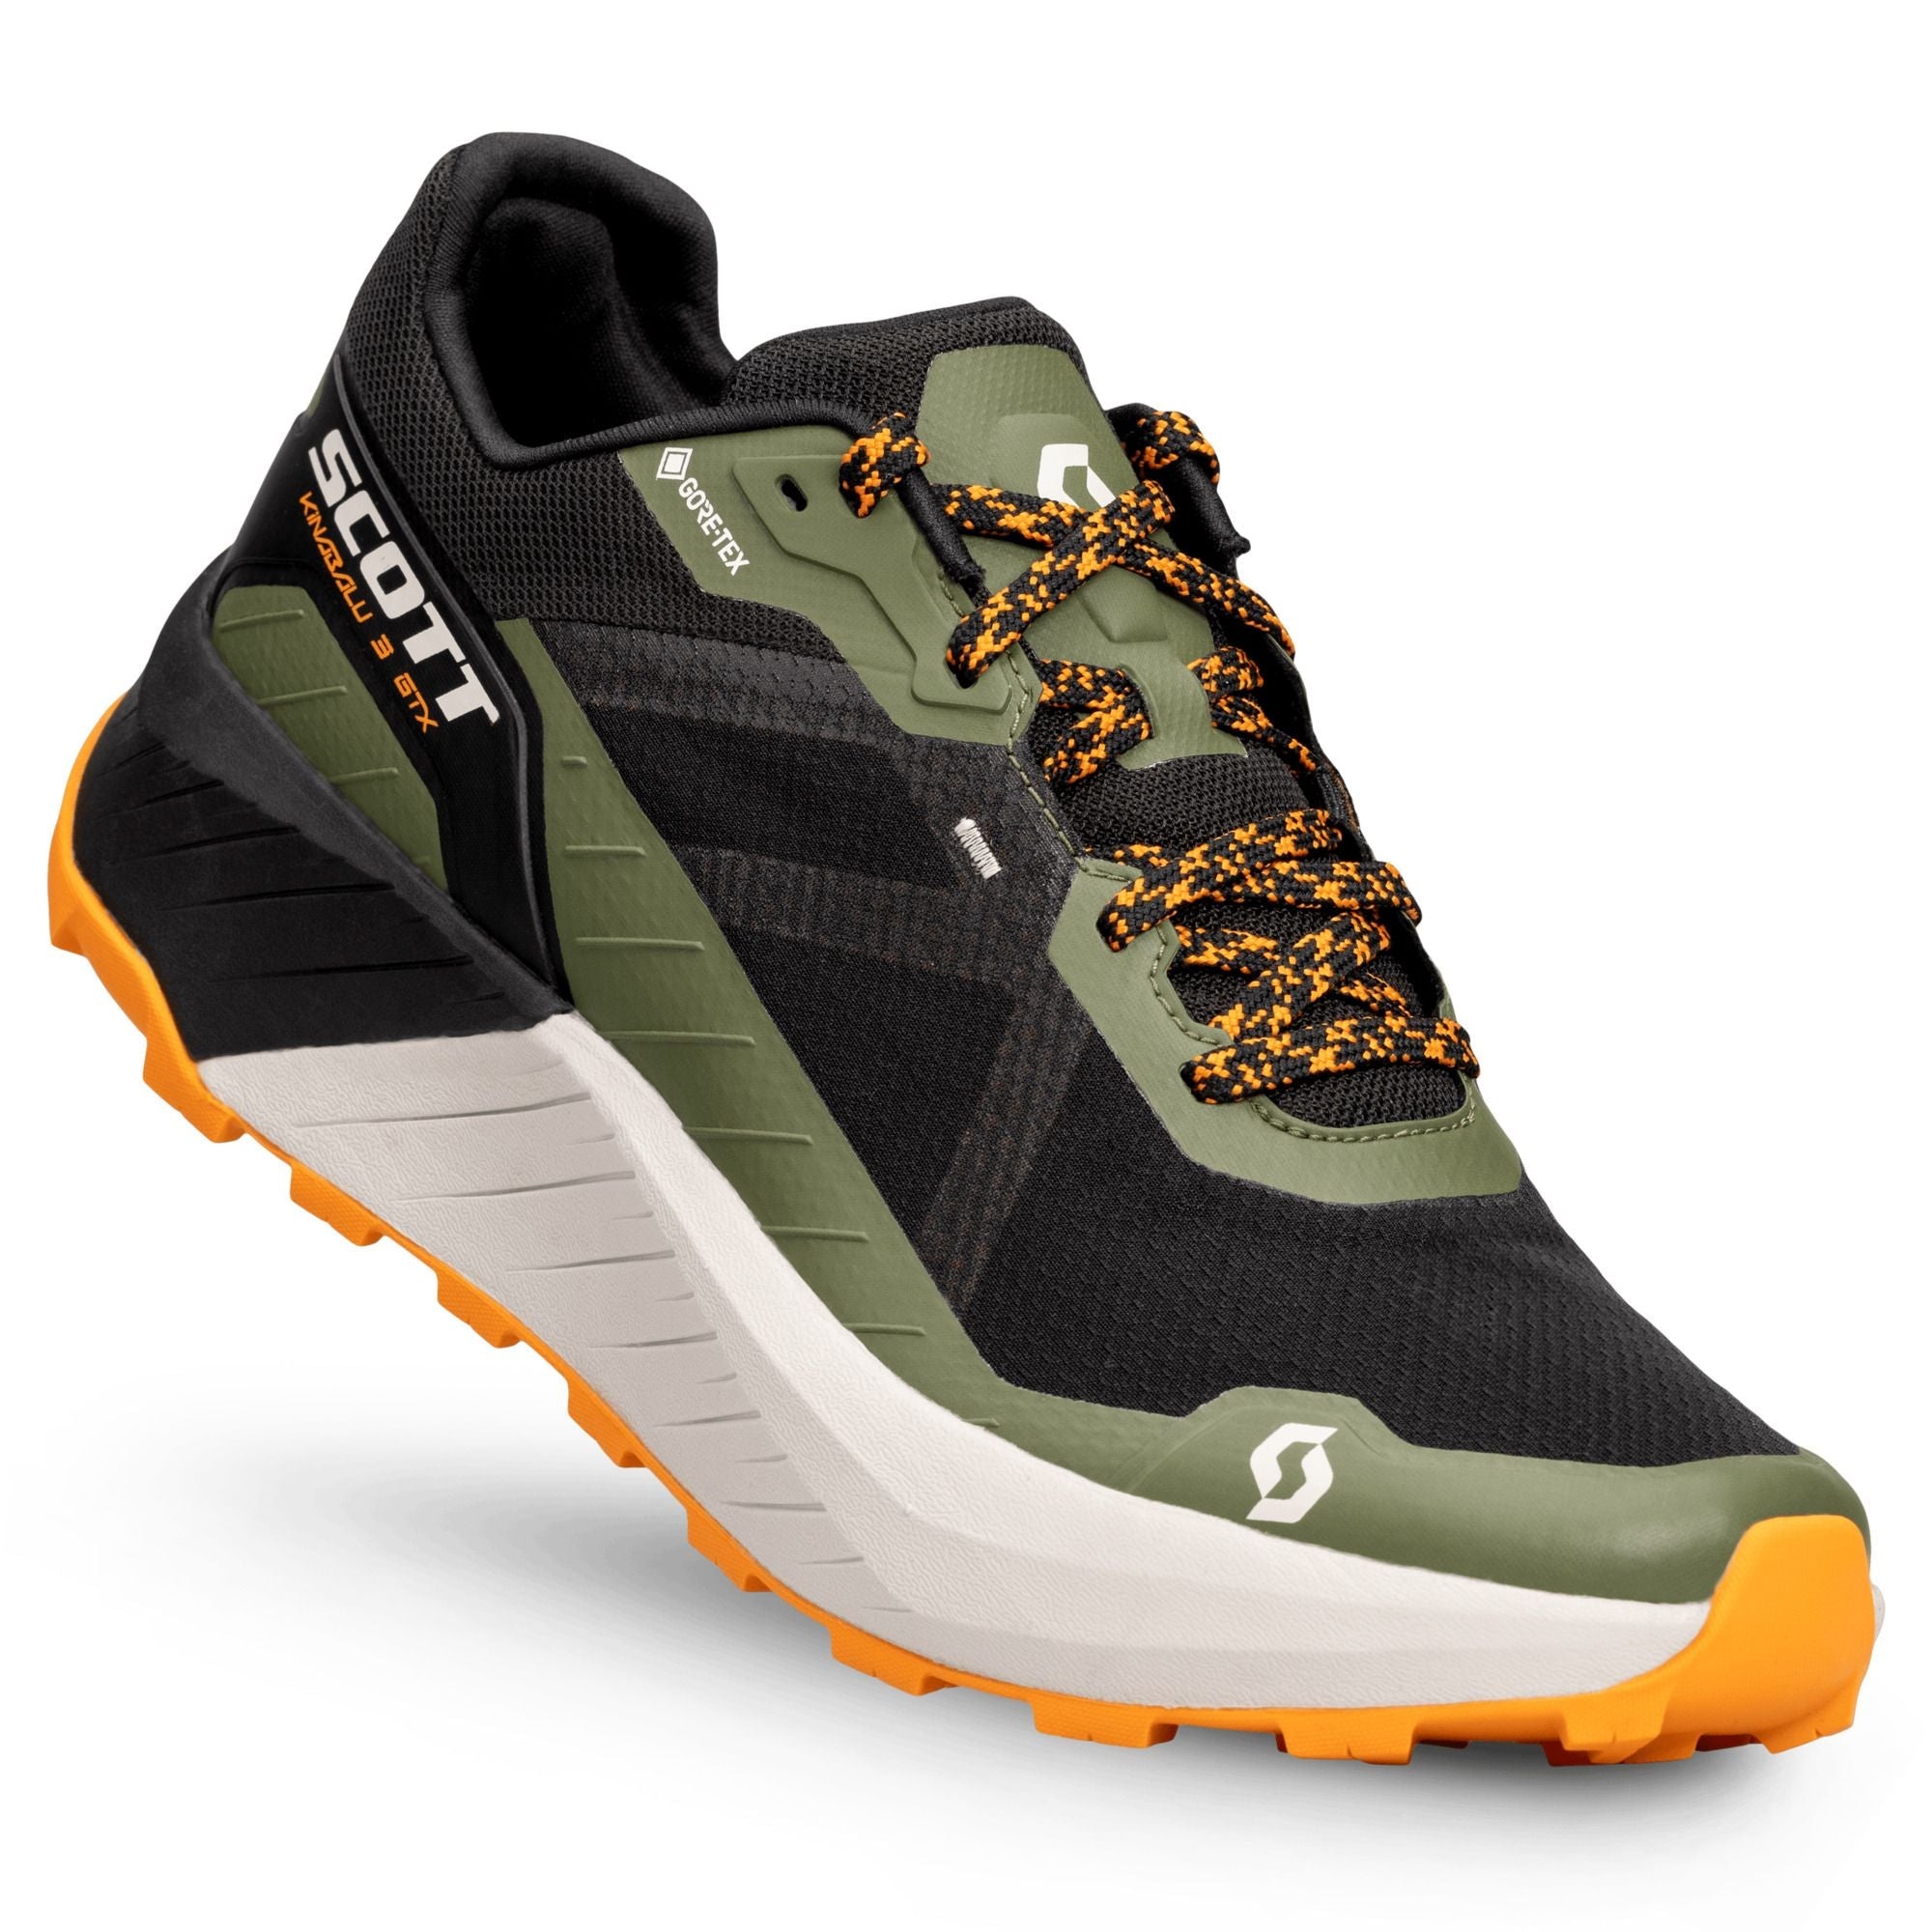 Scott Men's Kinabalu 3 GTX Trail Running Shoes Black/Flash Orange US 8.5 